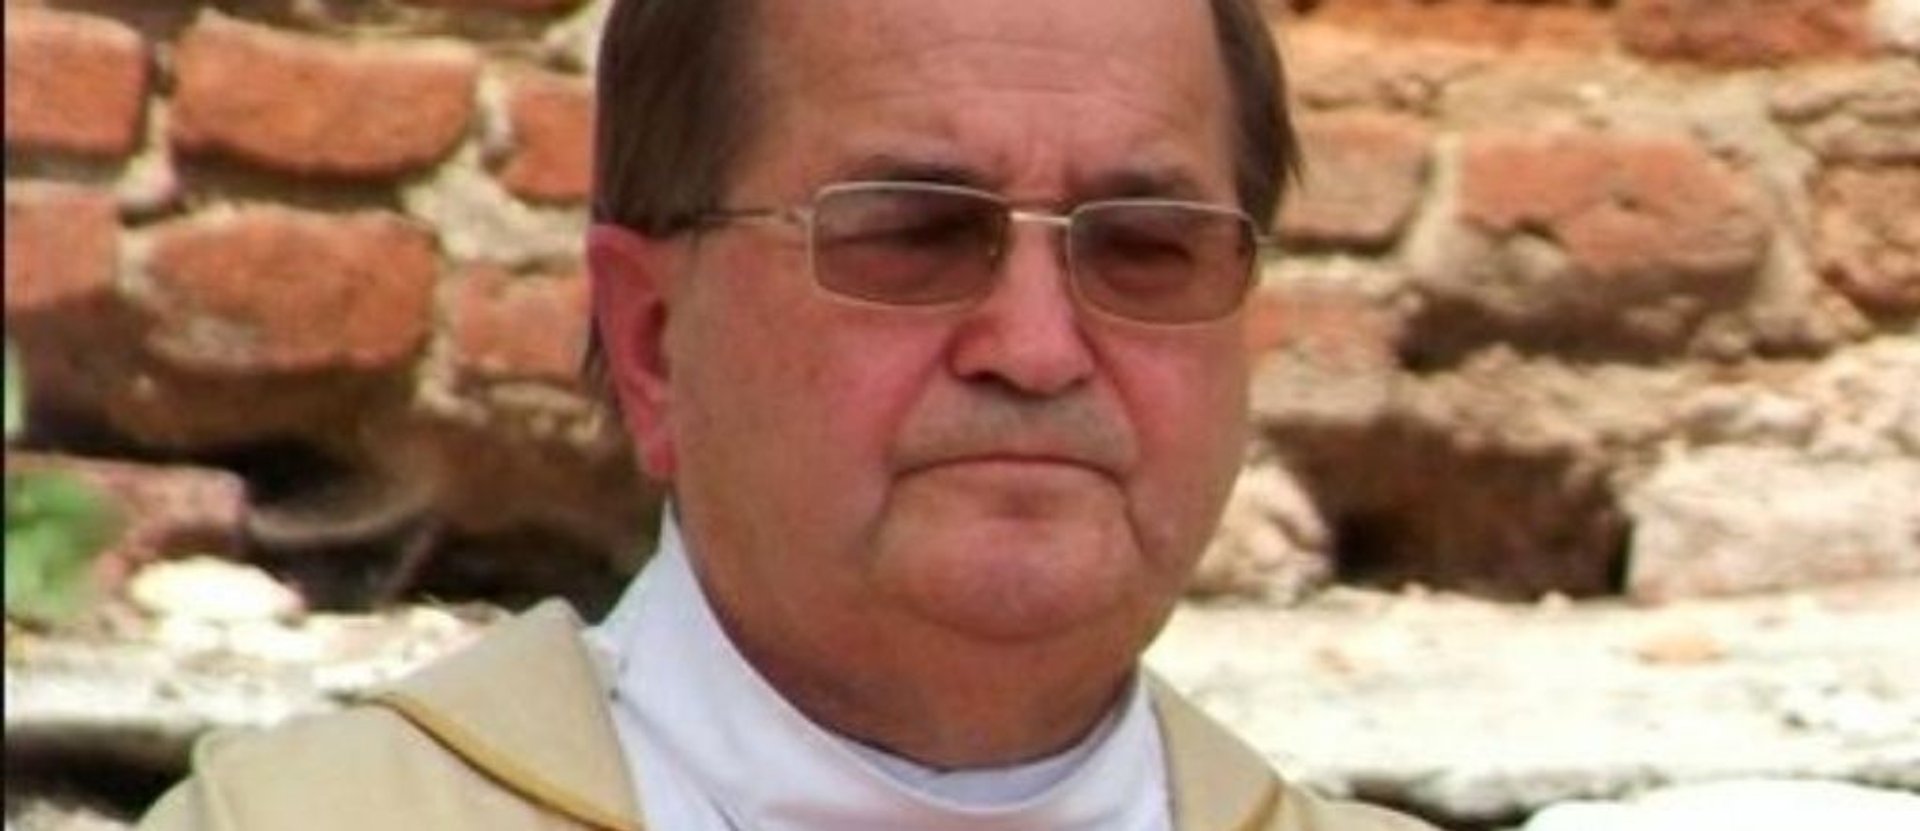 Tadeusz Rydzyk